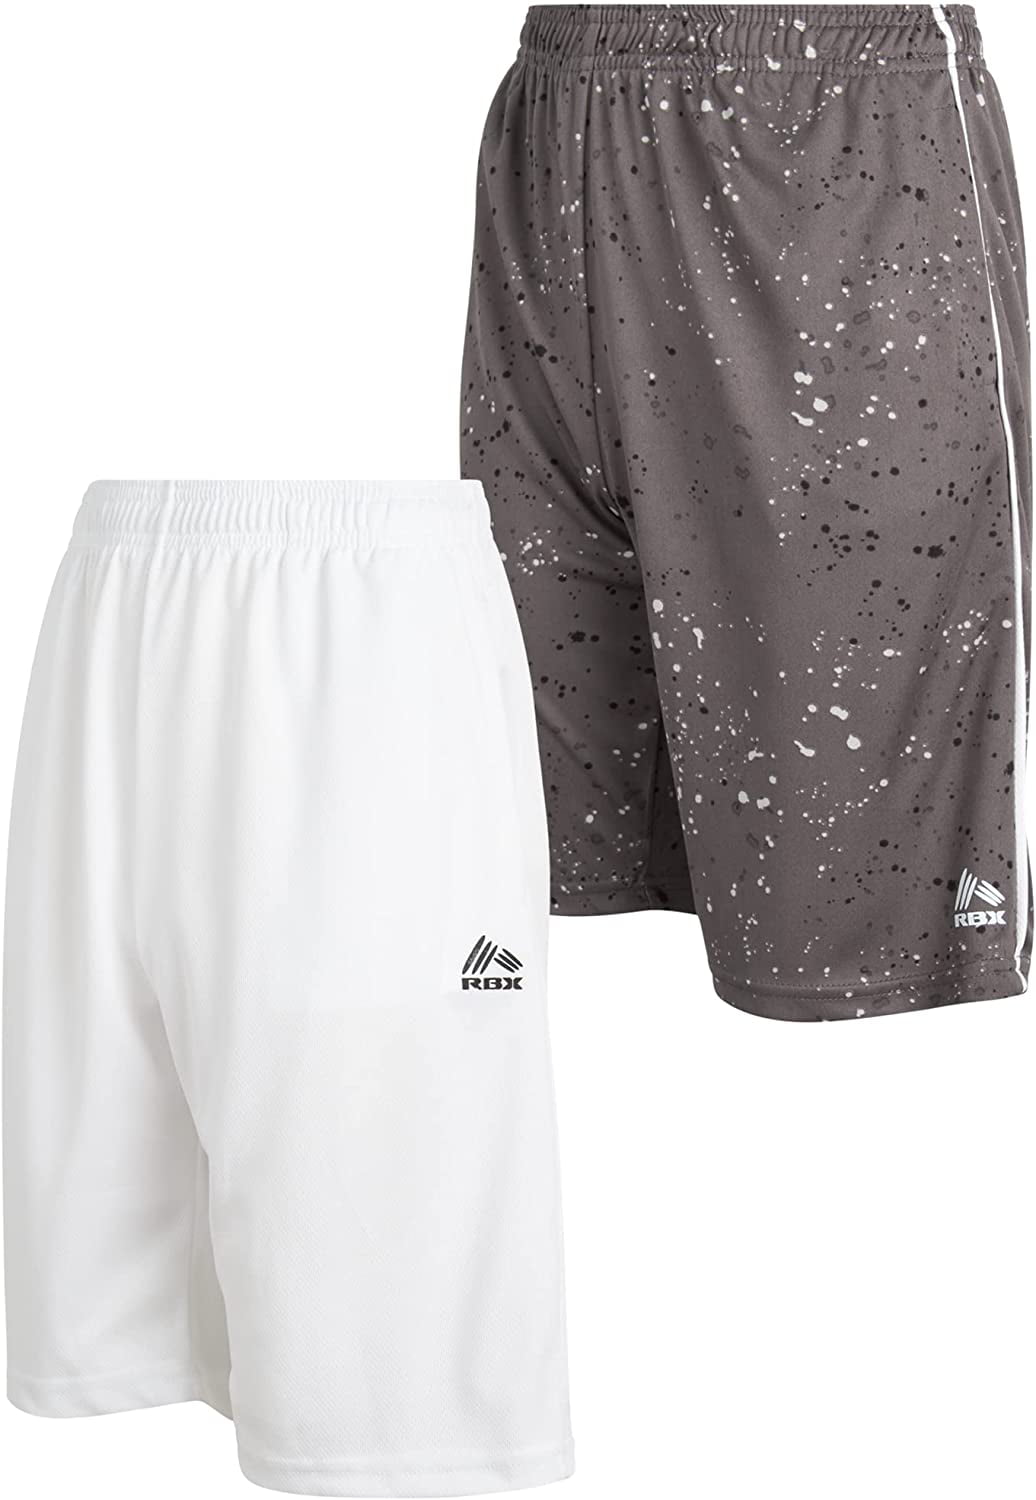 XL Details about   American Hawk 2 Piece Pack Cotton Jersey Shorts Black/Charcoal Boys 18/20 